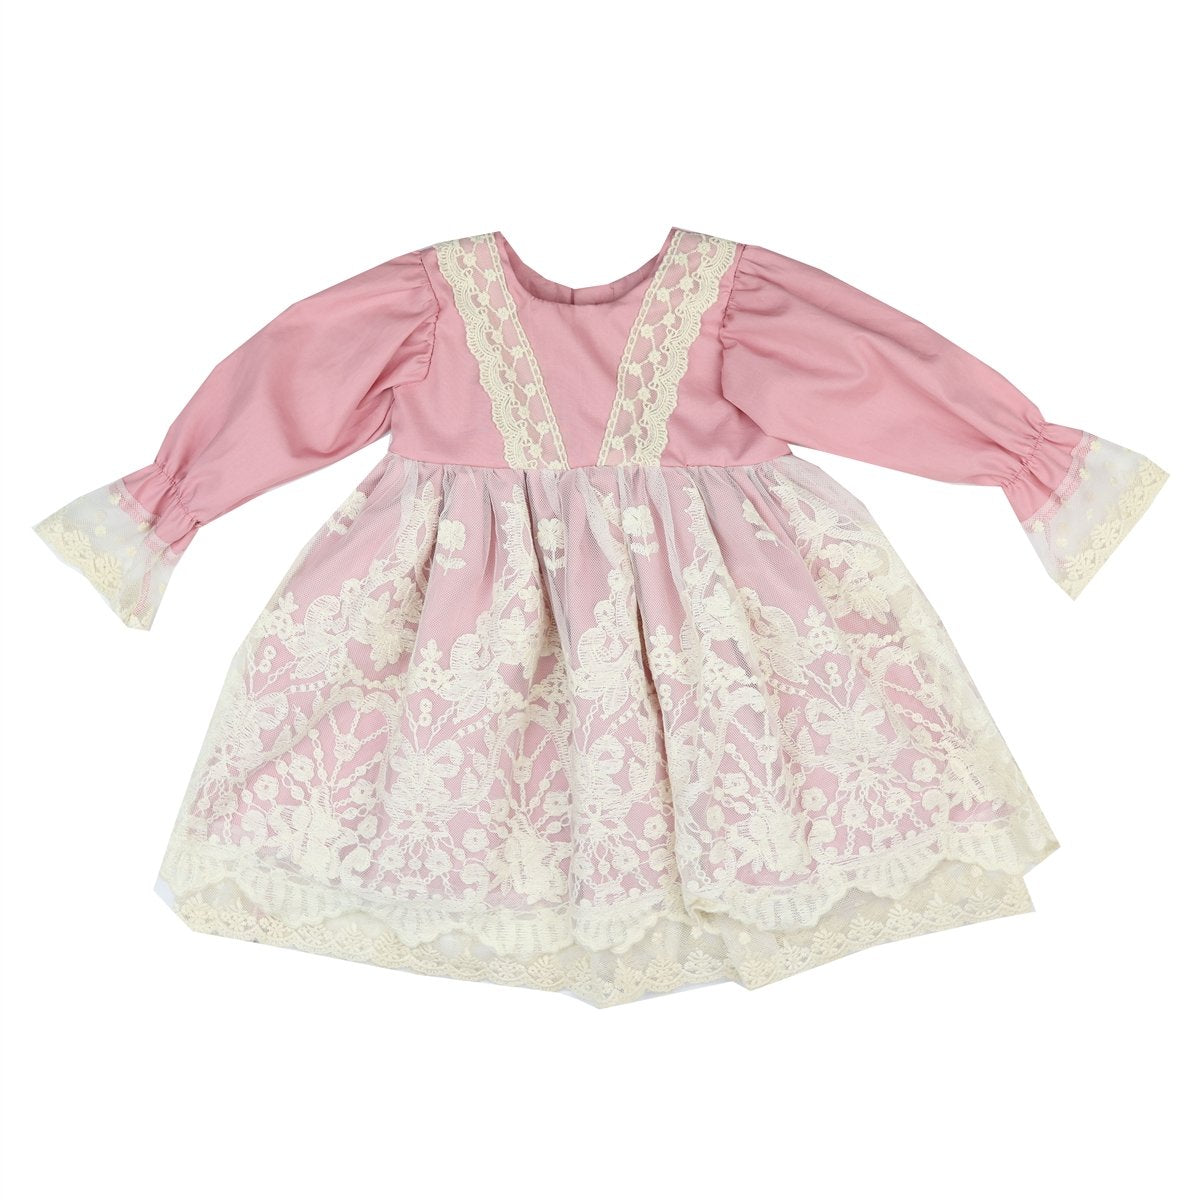 Rose Infant Toddler Girls Dress